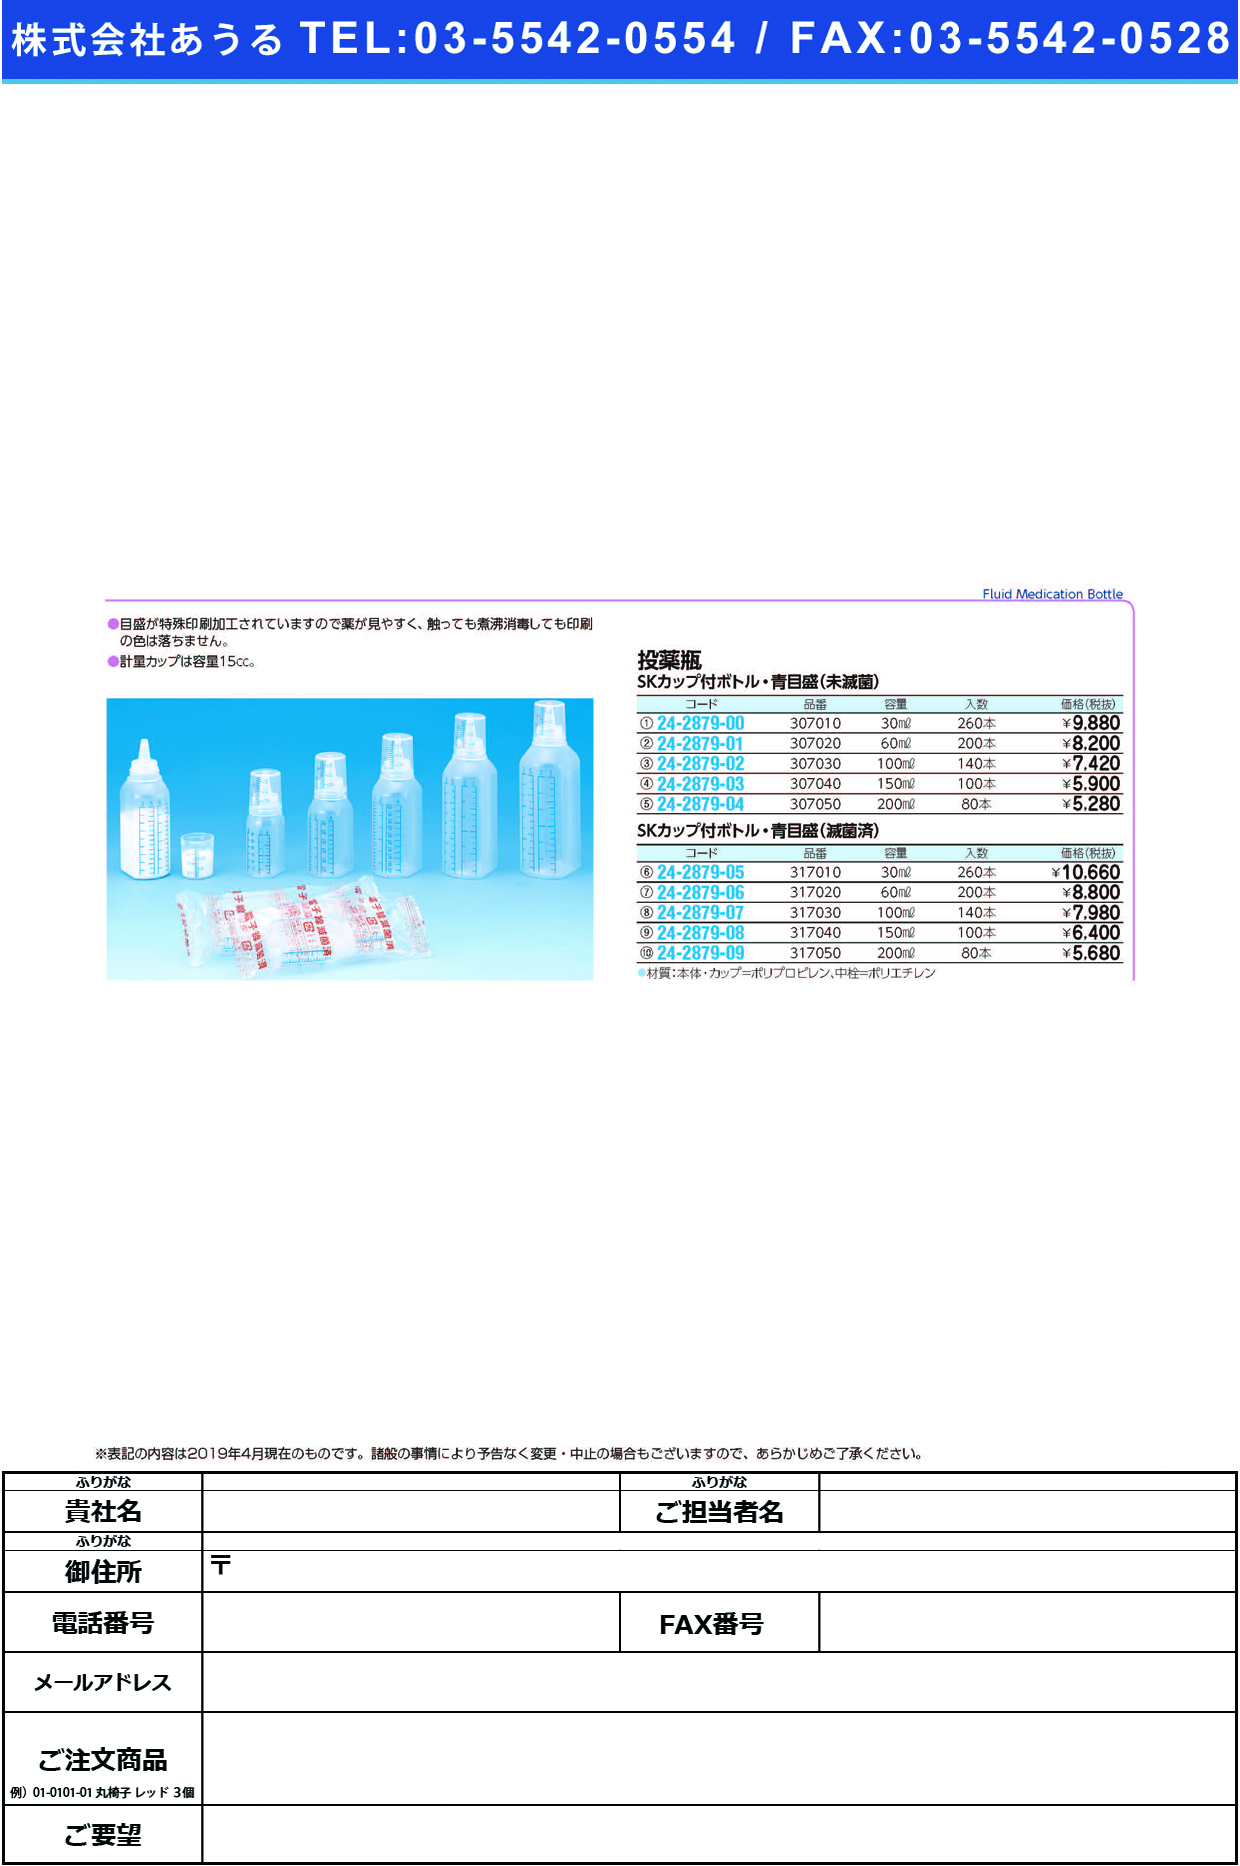 (24-2879-02)ＳＫカップ付ボトル青目盛（未滅菌） 100ML(140ﾎﾝｲﾘ) SKｶｯﾌﾟﾂｷﾎﾞﾄﾙﾐﾒｯｷﾝ【1袋単位】【2019年カタログ商品】